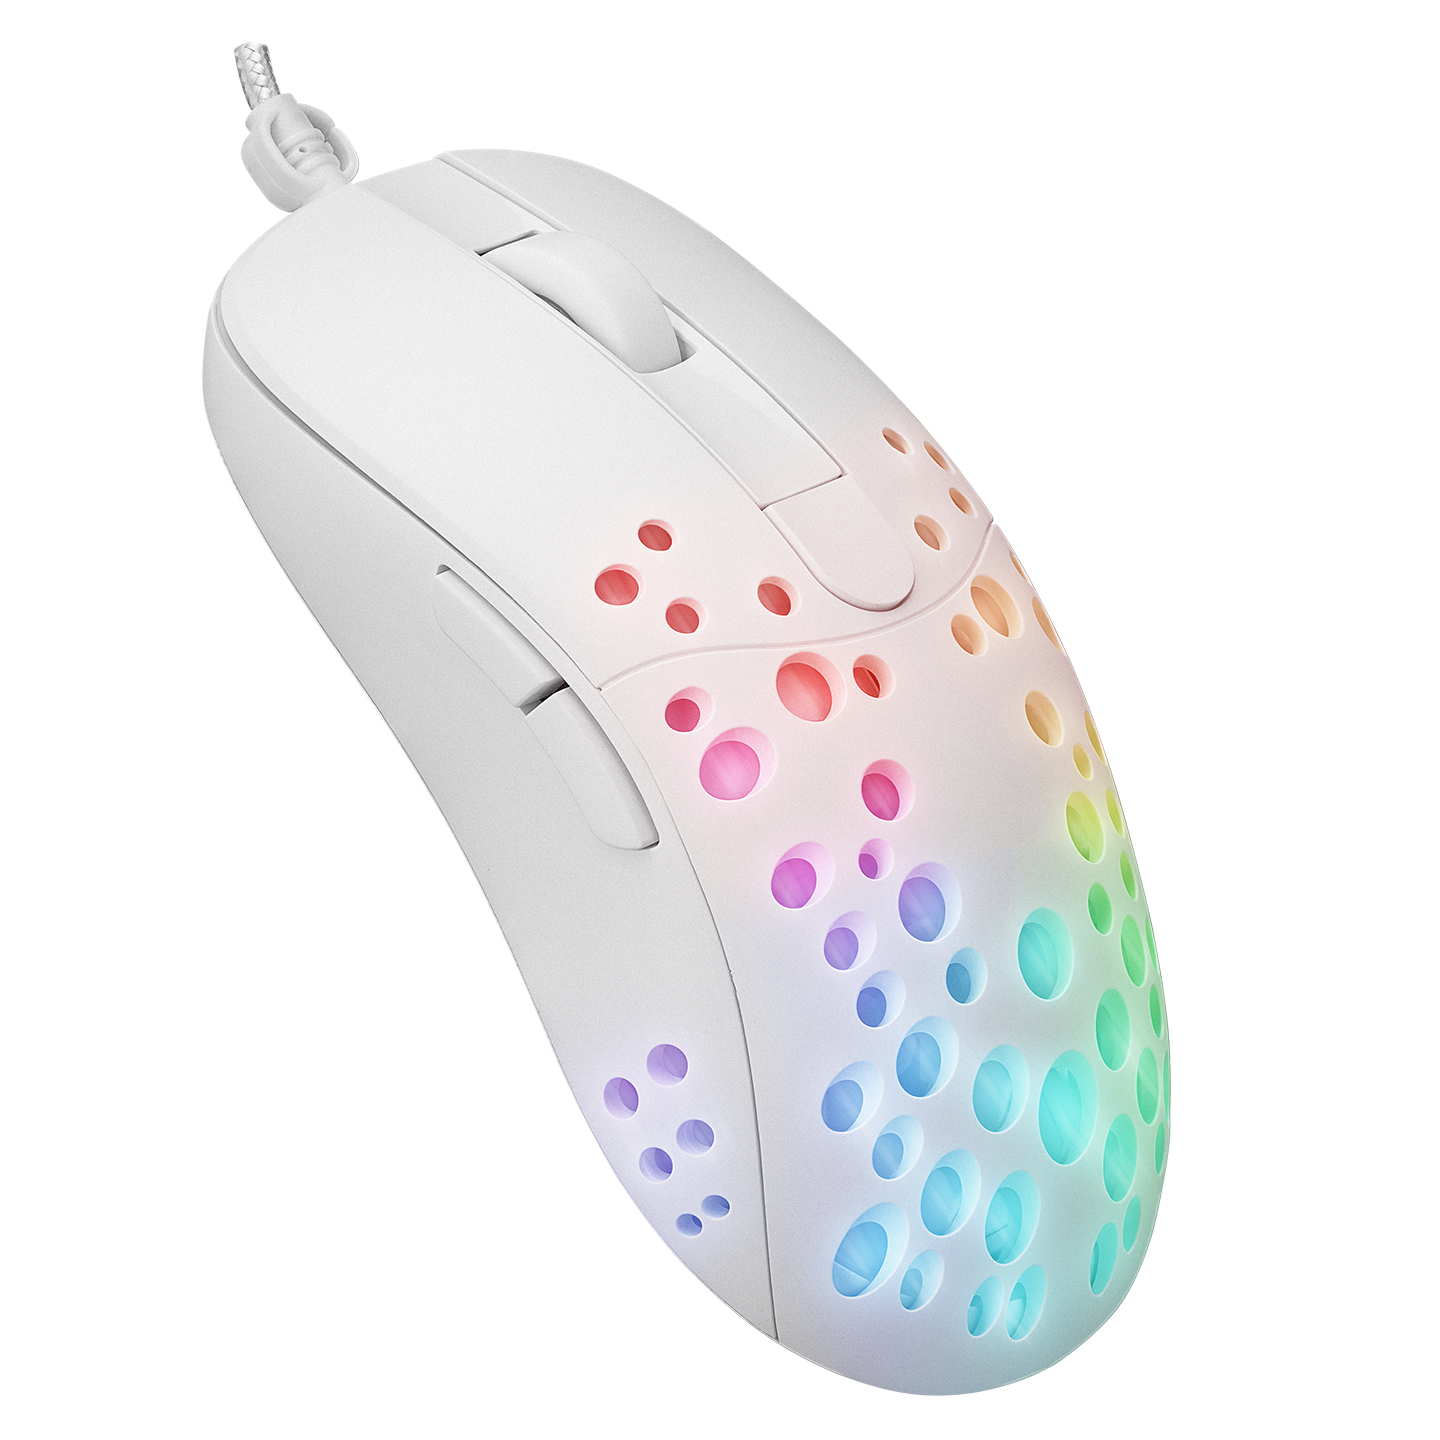 Altec Lansing ALGM7622 Beyaz USB Kablolu 6 Tuşlu Renkli Led Işıklı 8000DPI Gaming Oyuncu Mouse